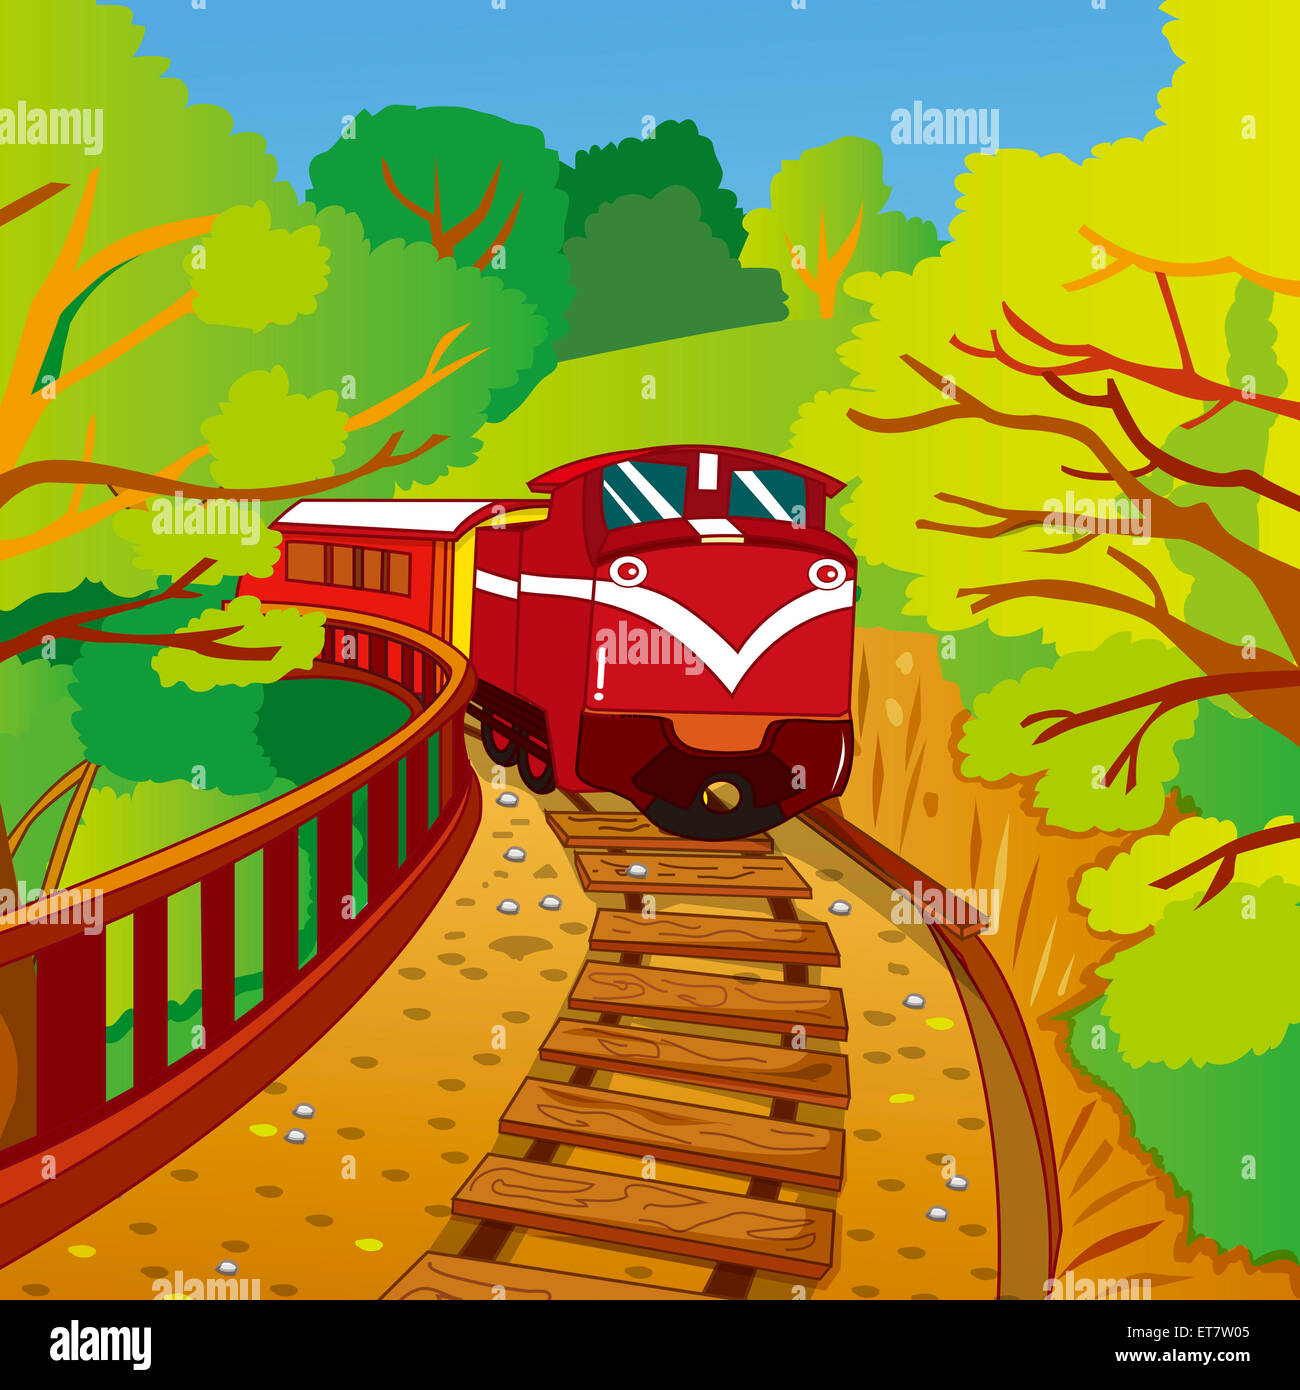 Alishan, Chiayi, train, Taiwan, illustration technique, Banque D'Images